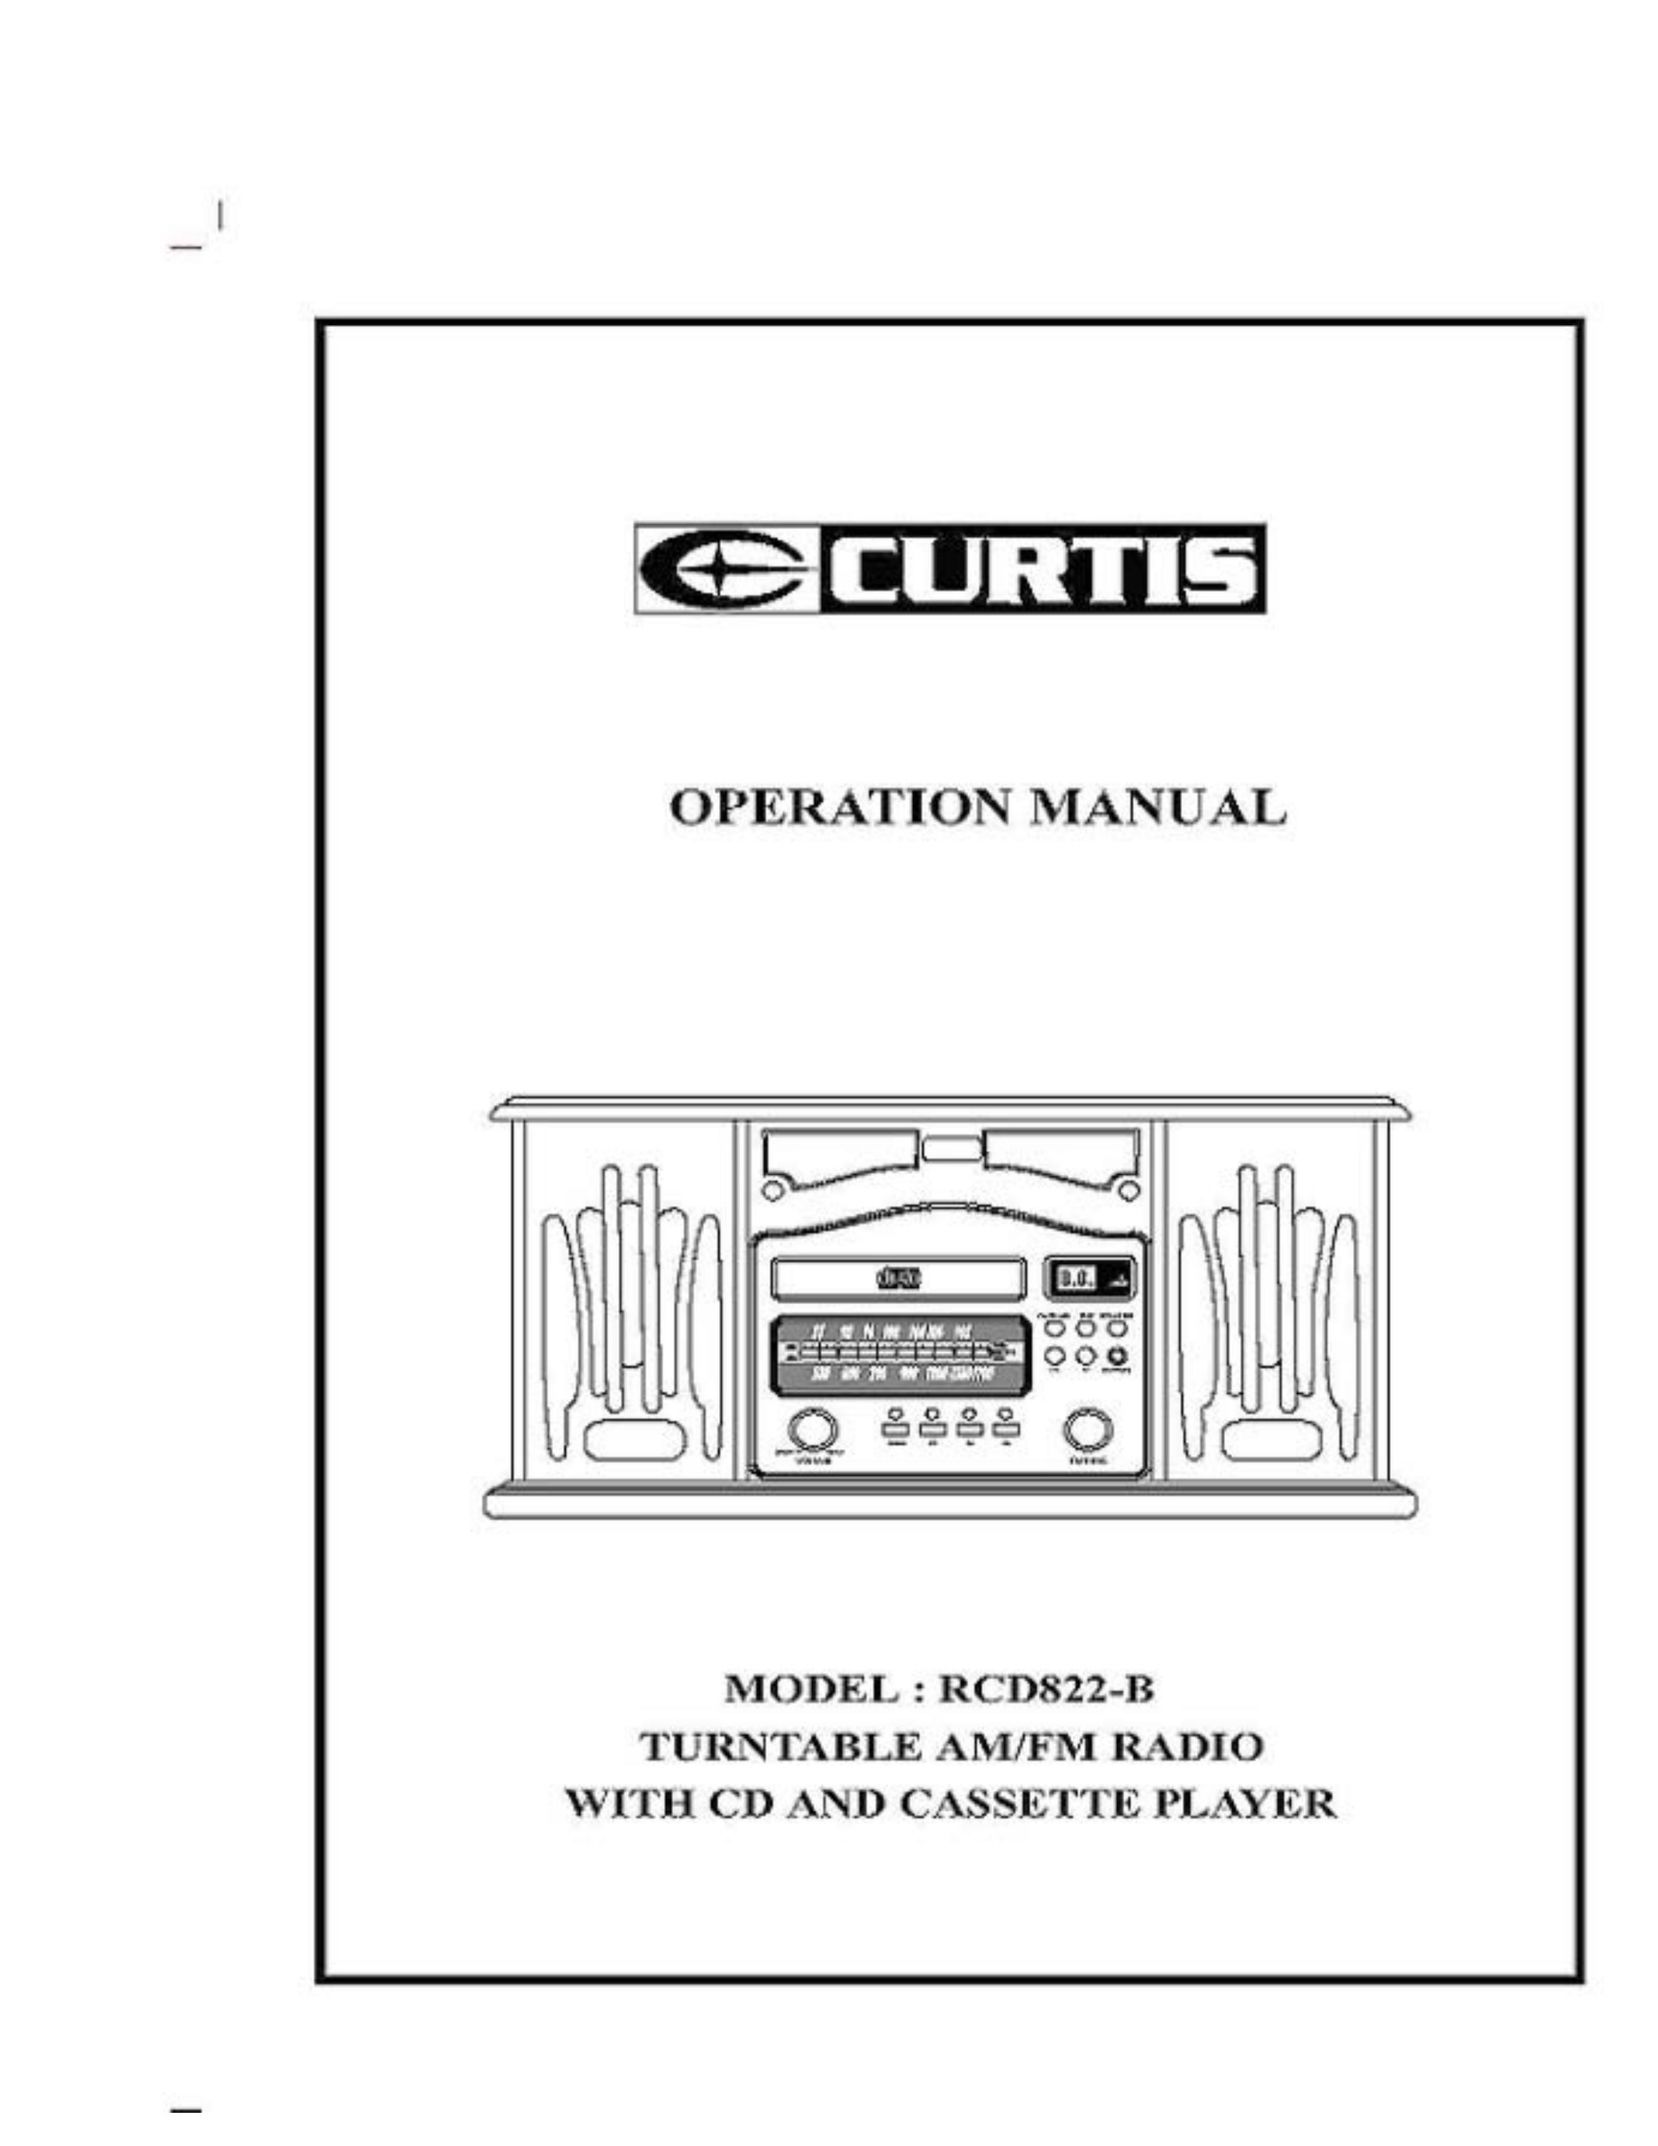 Curtis RCD822-B Radio User Manual